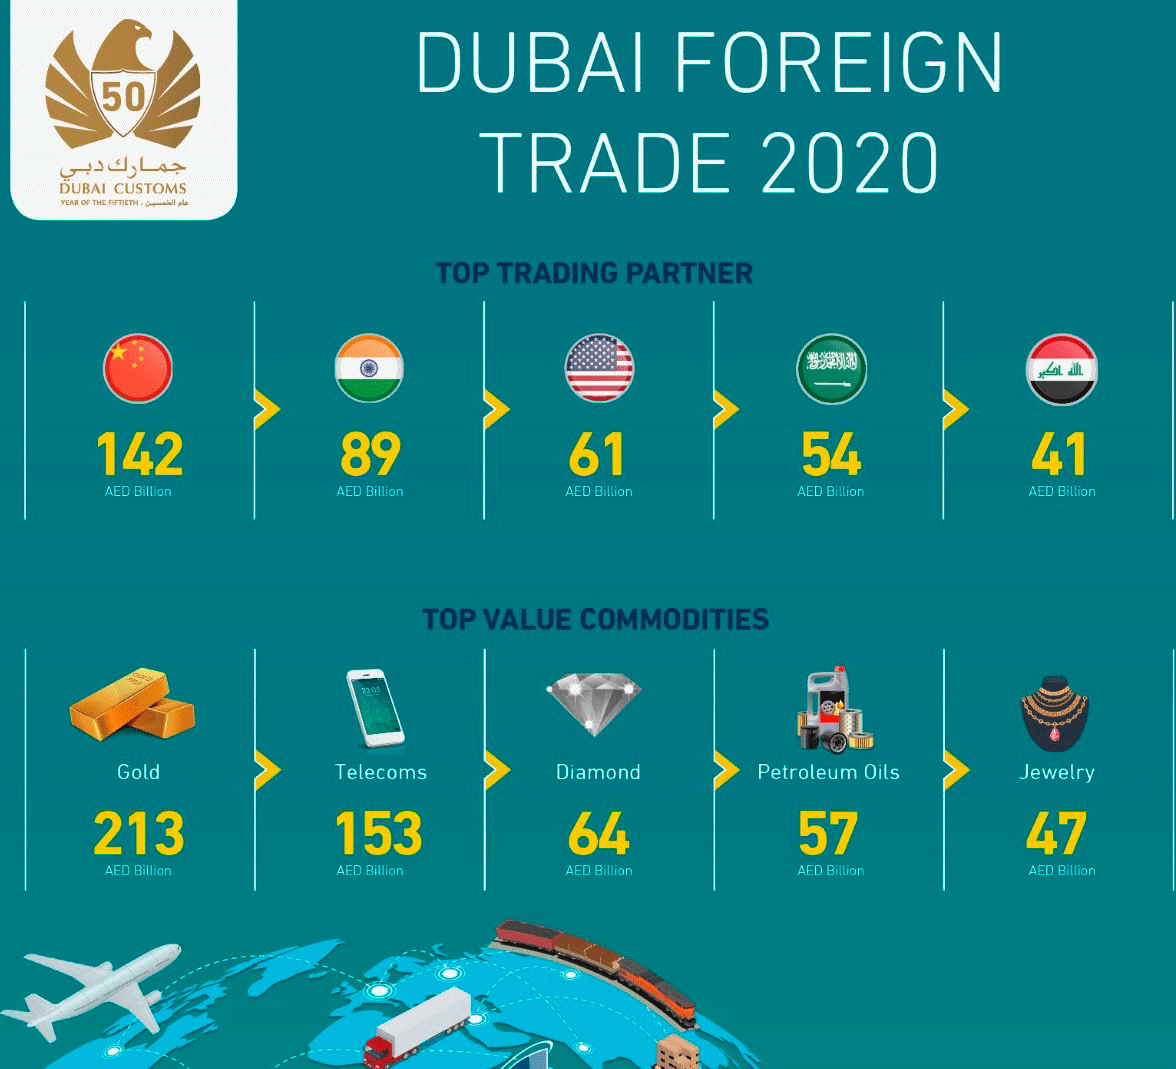 Dubai's trading partners